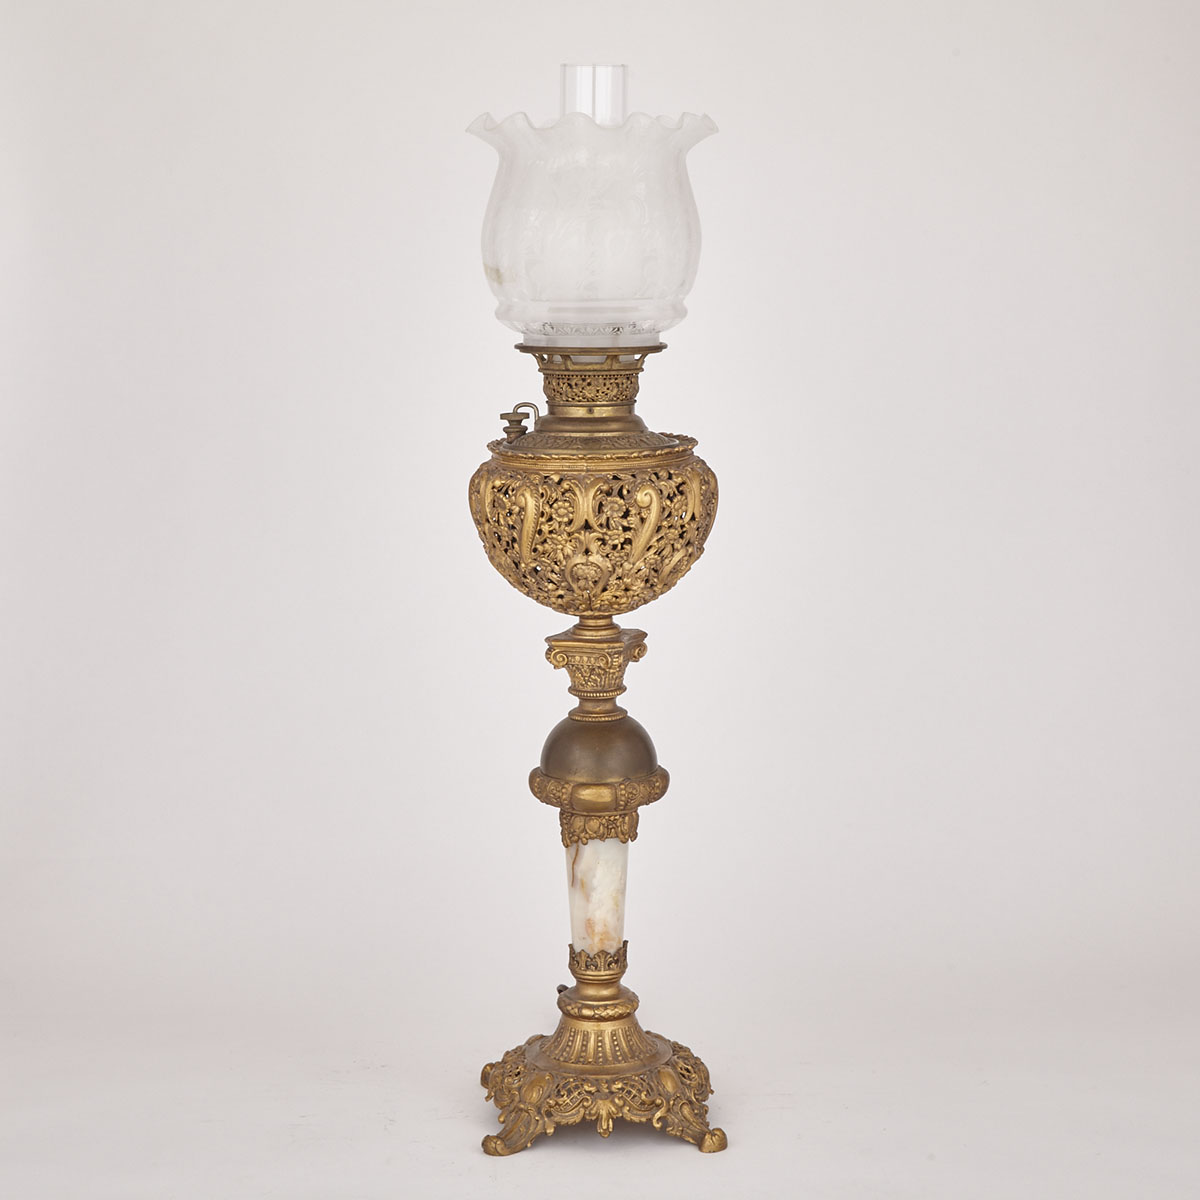 Victorian Onyx Mounted Gilt Metal Kerosene Banquet Lamp, late 19th century